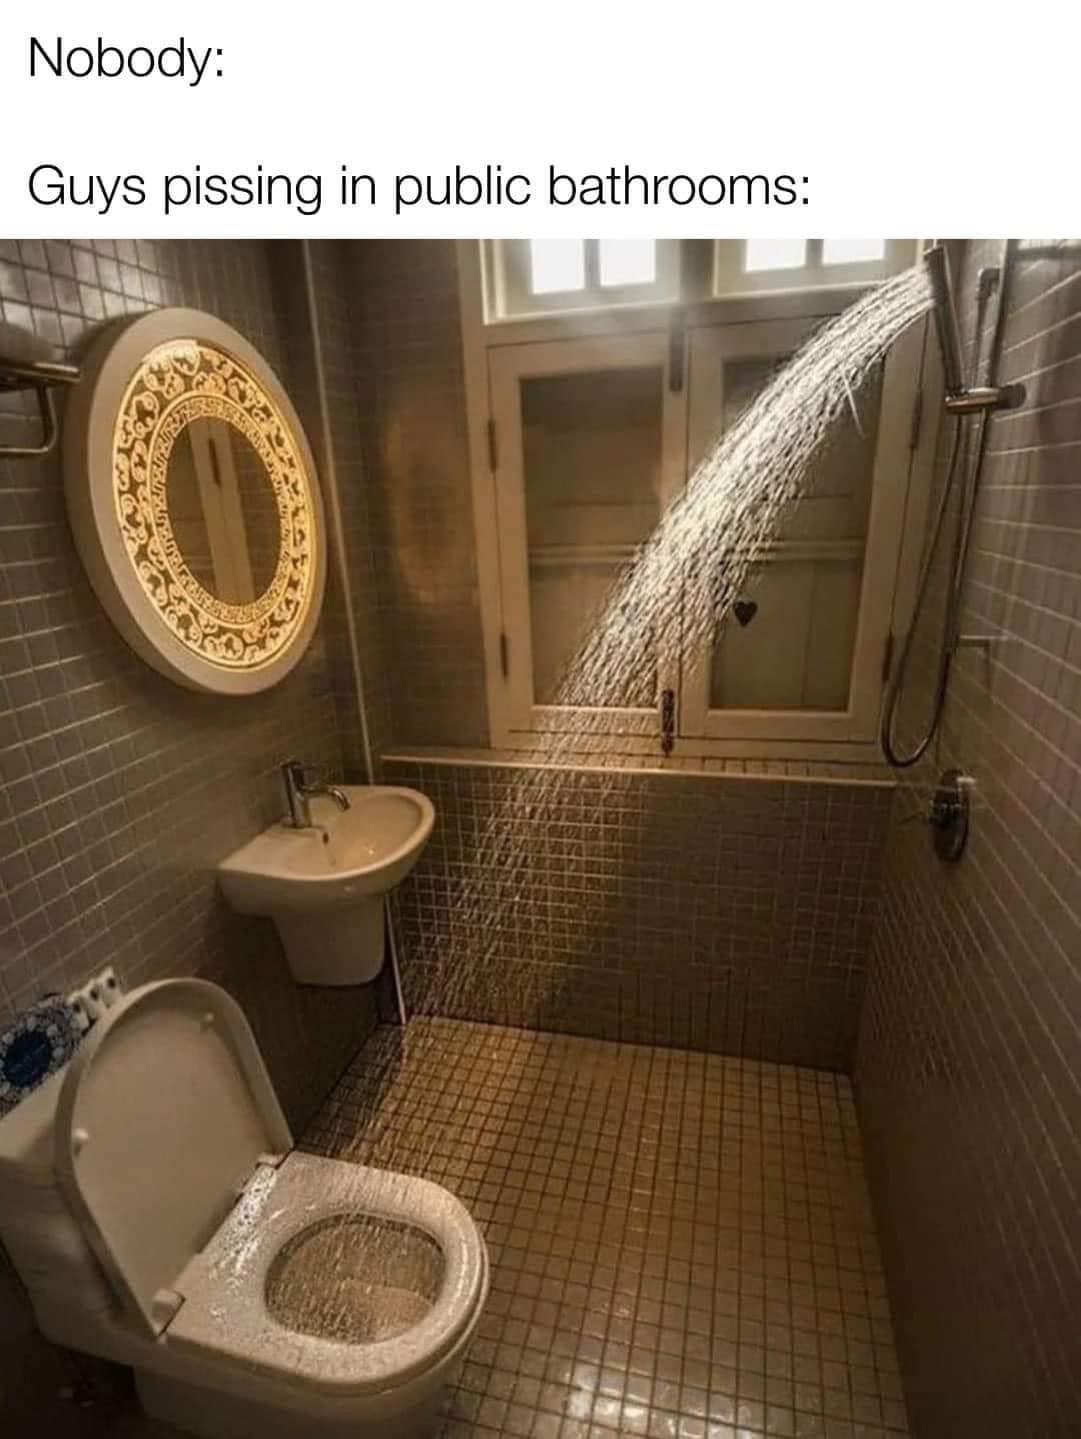 monday morning randomness - bathroom design fails - Nobody Guys pissing in public bathrooms O